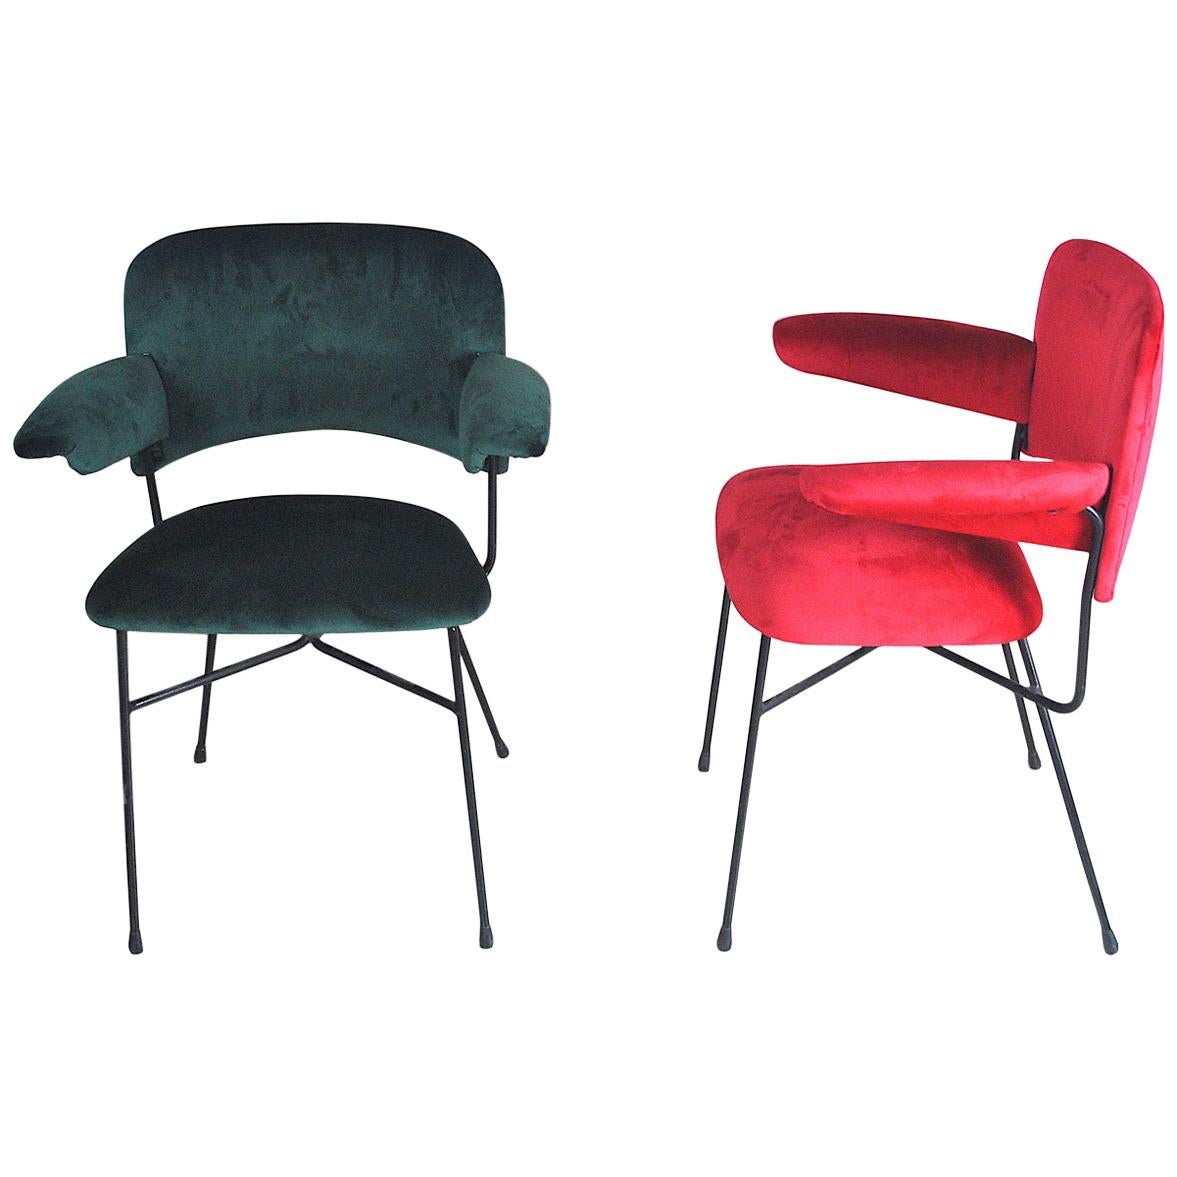 Studio BBPR Set of Two Italian Chairs Urania Model